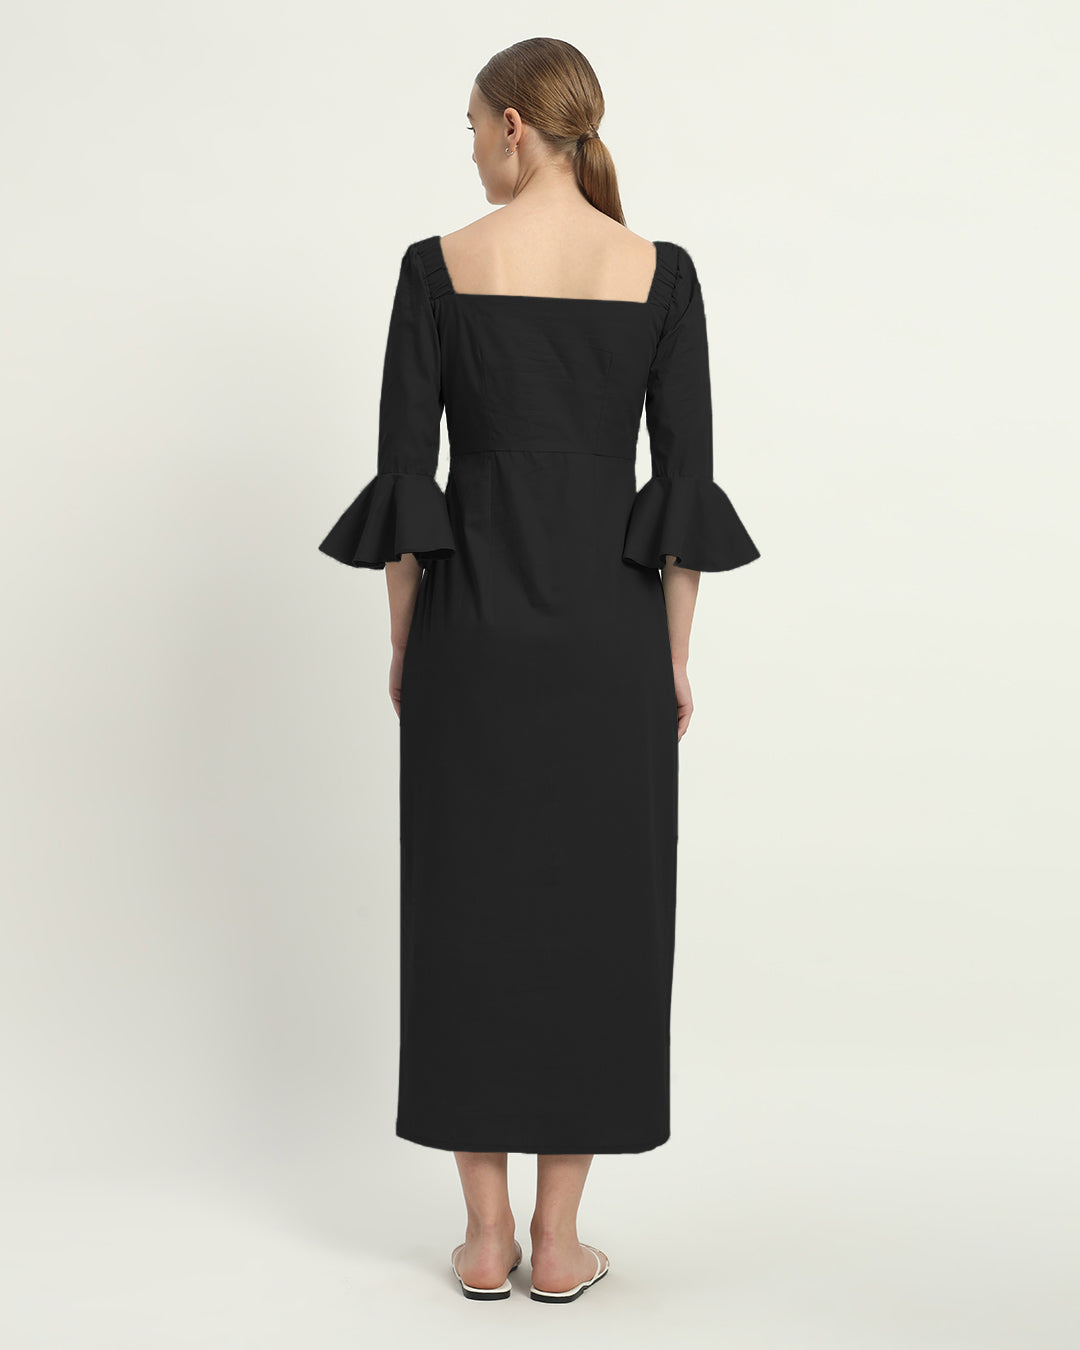 The Rosendale Noir Cotton Dress